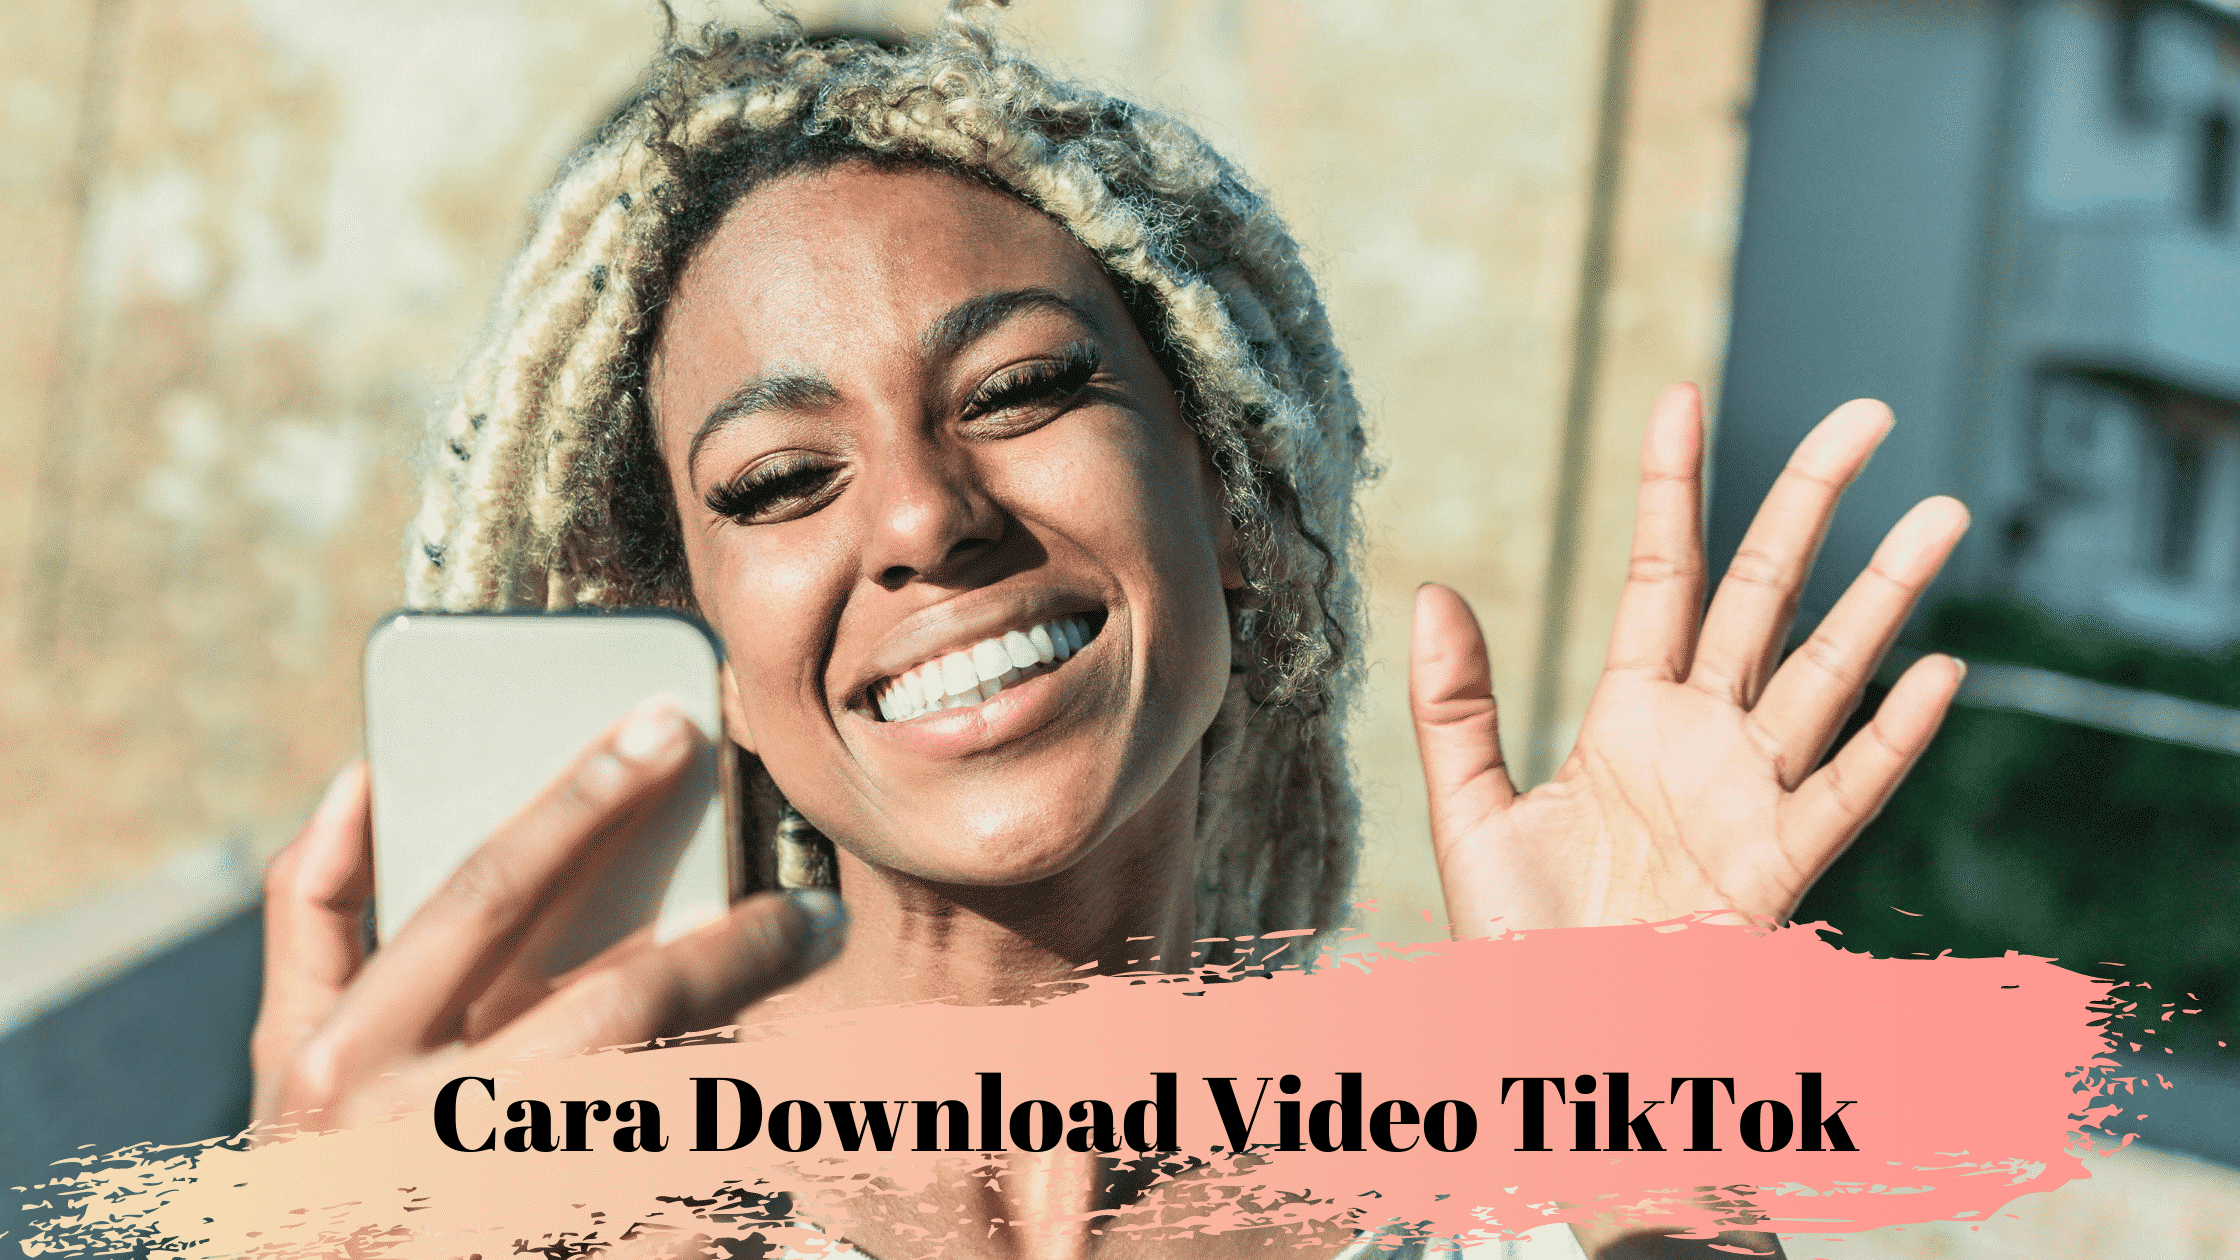 Cara download Video TikTok